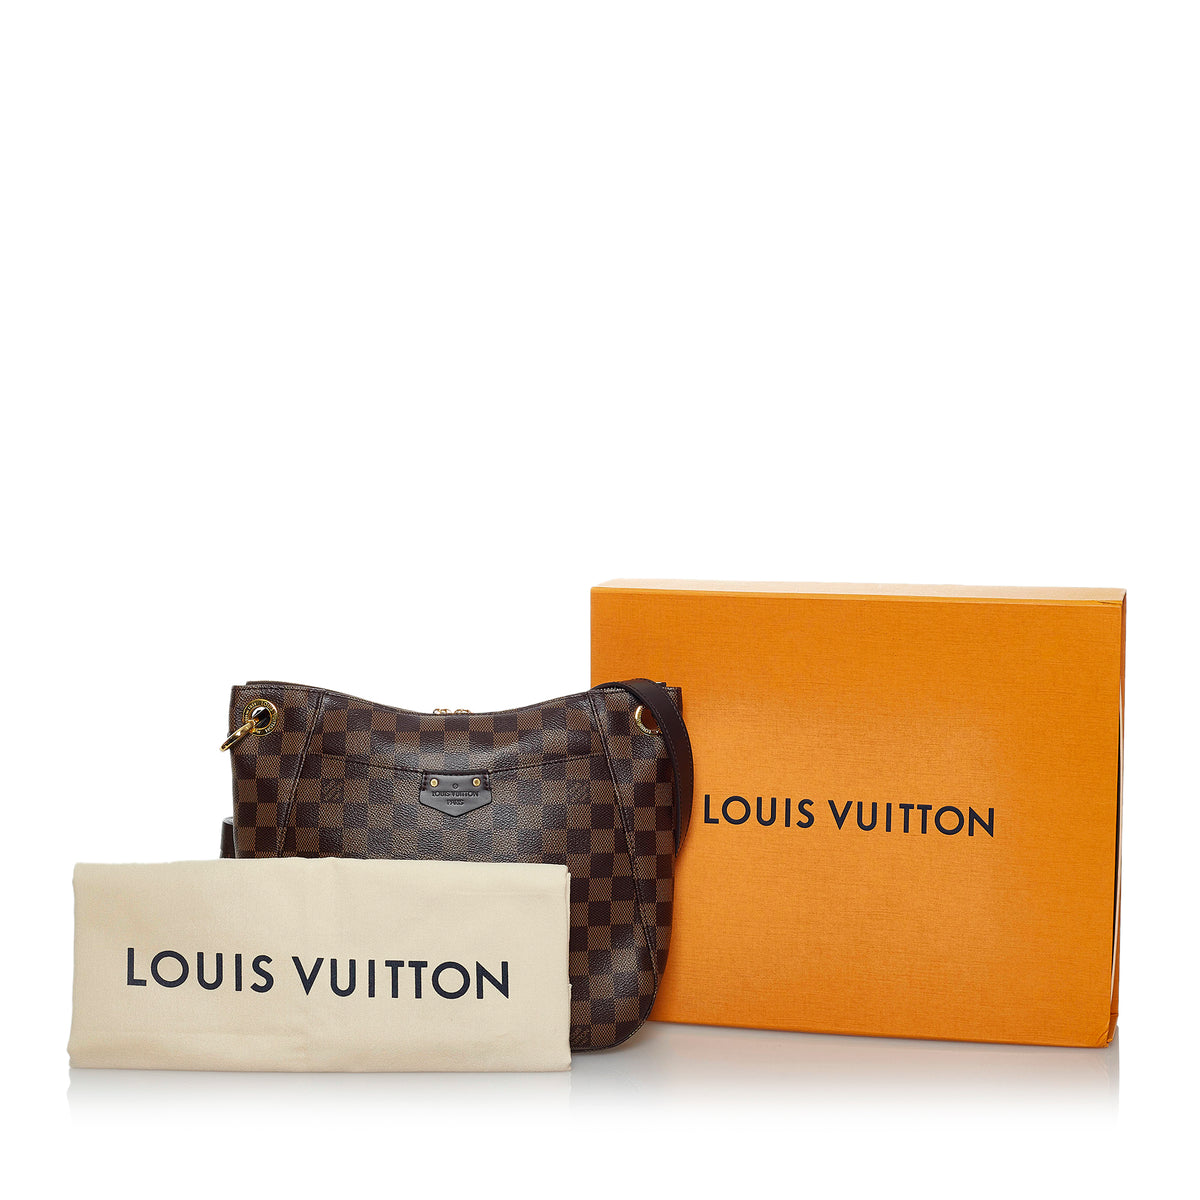 Sold at Auction: Louis Vuitton, LOUIS VUITTON DAMIER SOUTH BANK BESACE  CROSSBODY